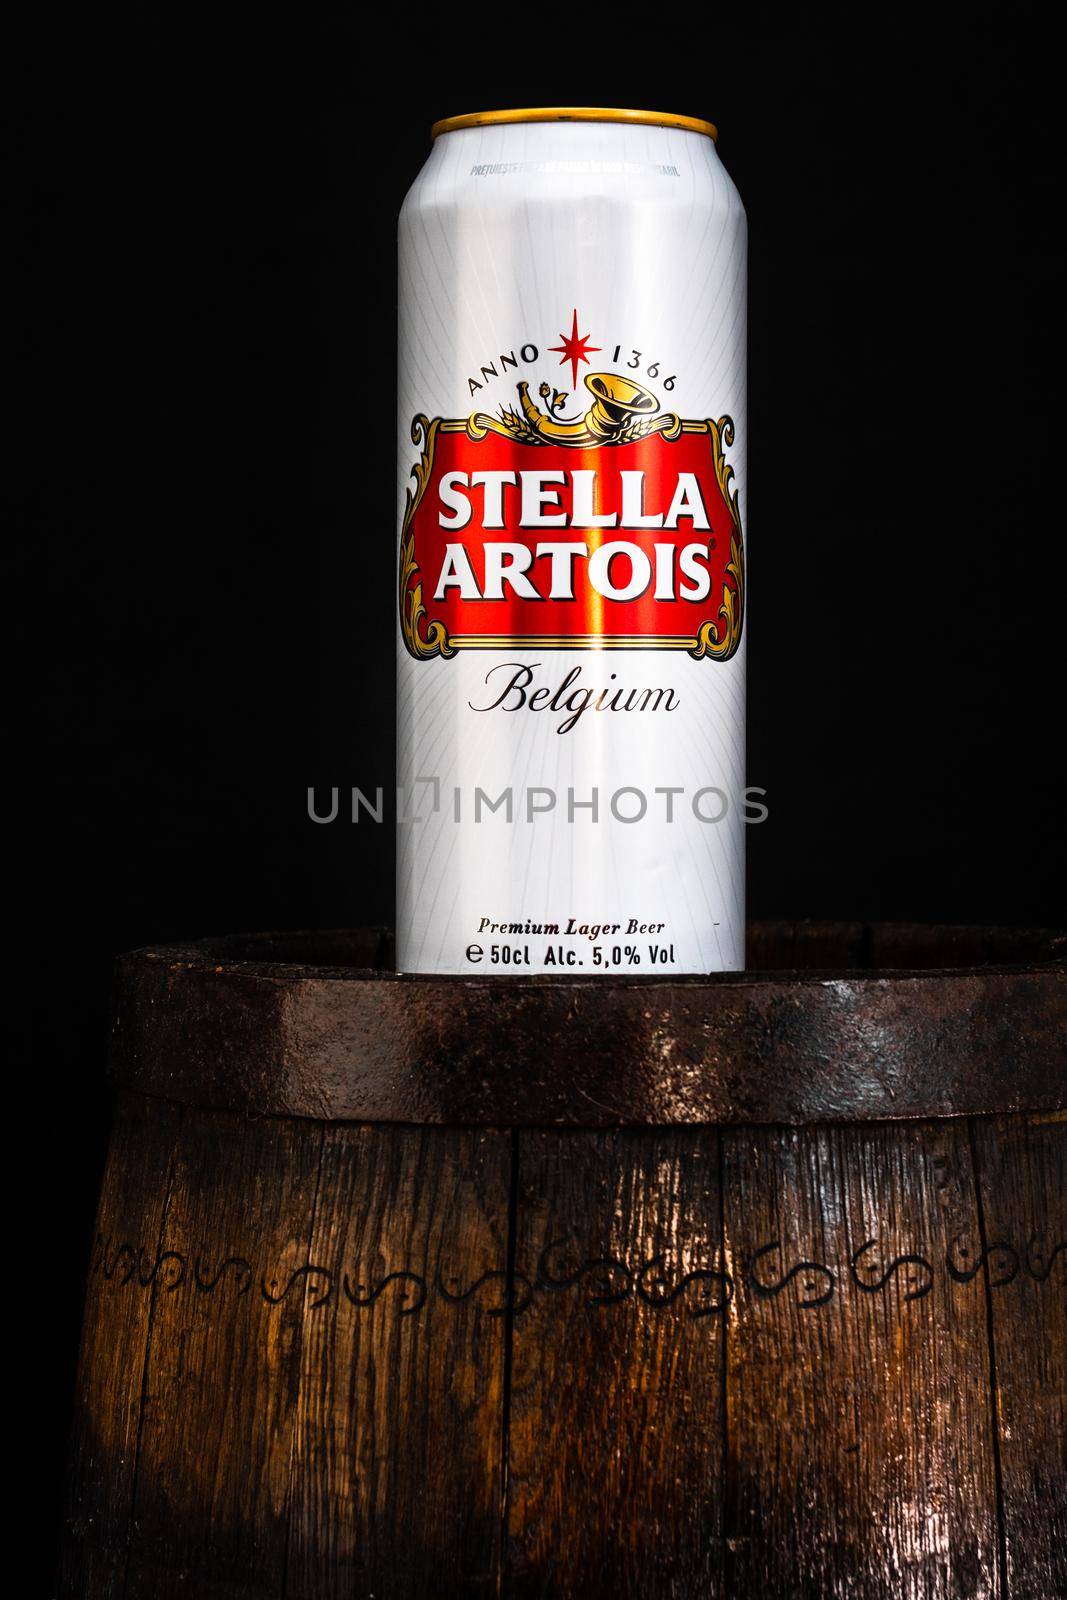 Can of Stella Artois beer on beer barrel with dark background. Illustrative editorial photo Bucharest, Romania, 2021 by vladispas